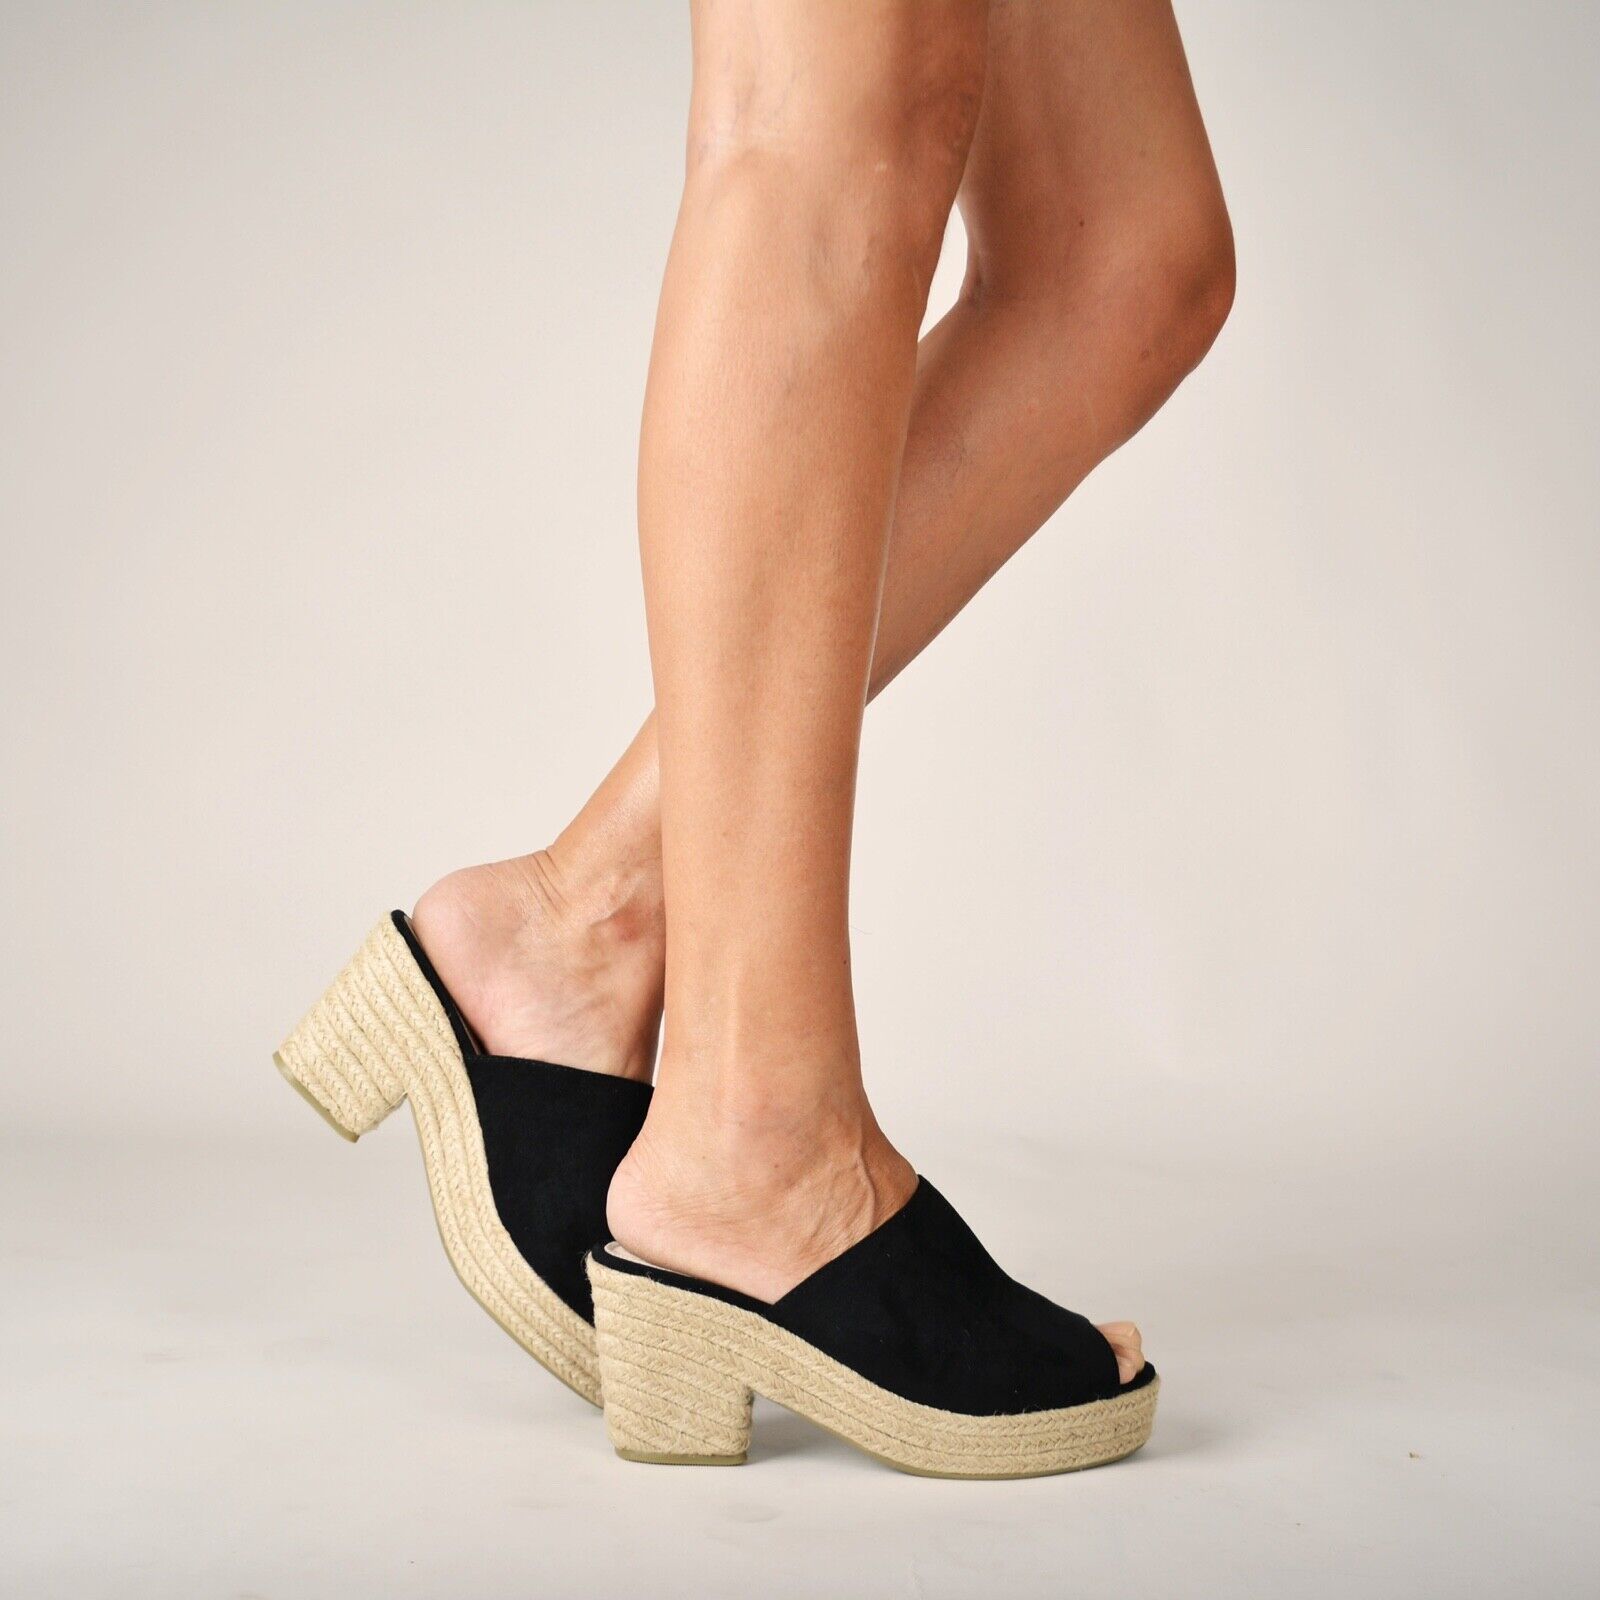 Sandalias de Mujer Zuecos Plataforma y Yute estilo Alpargata Verano